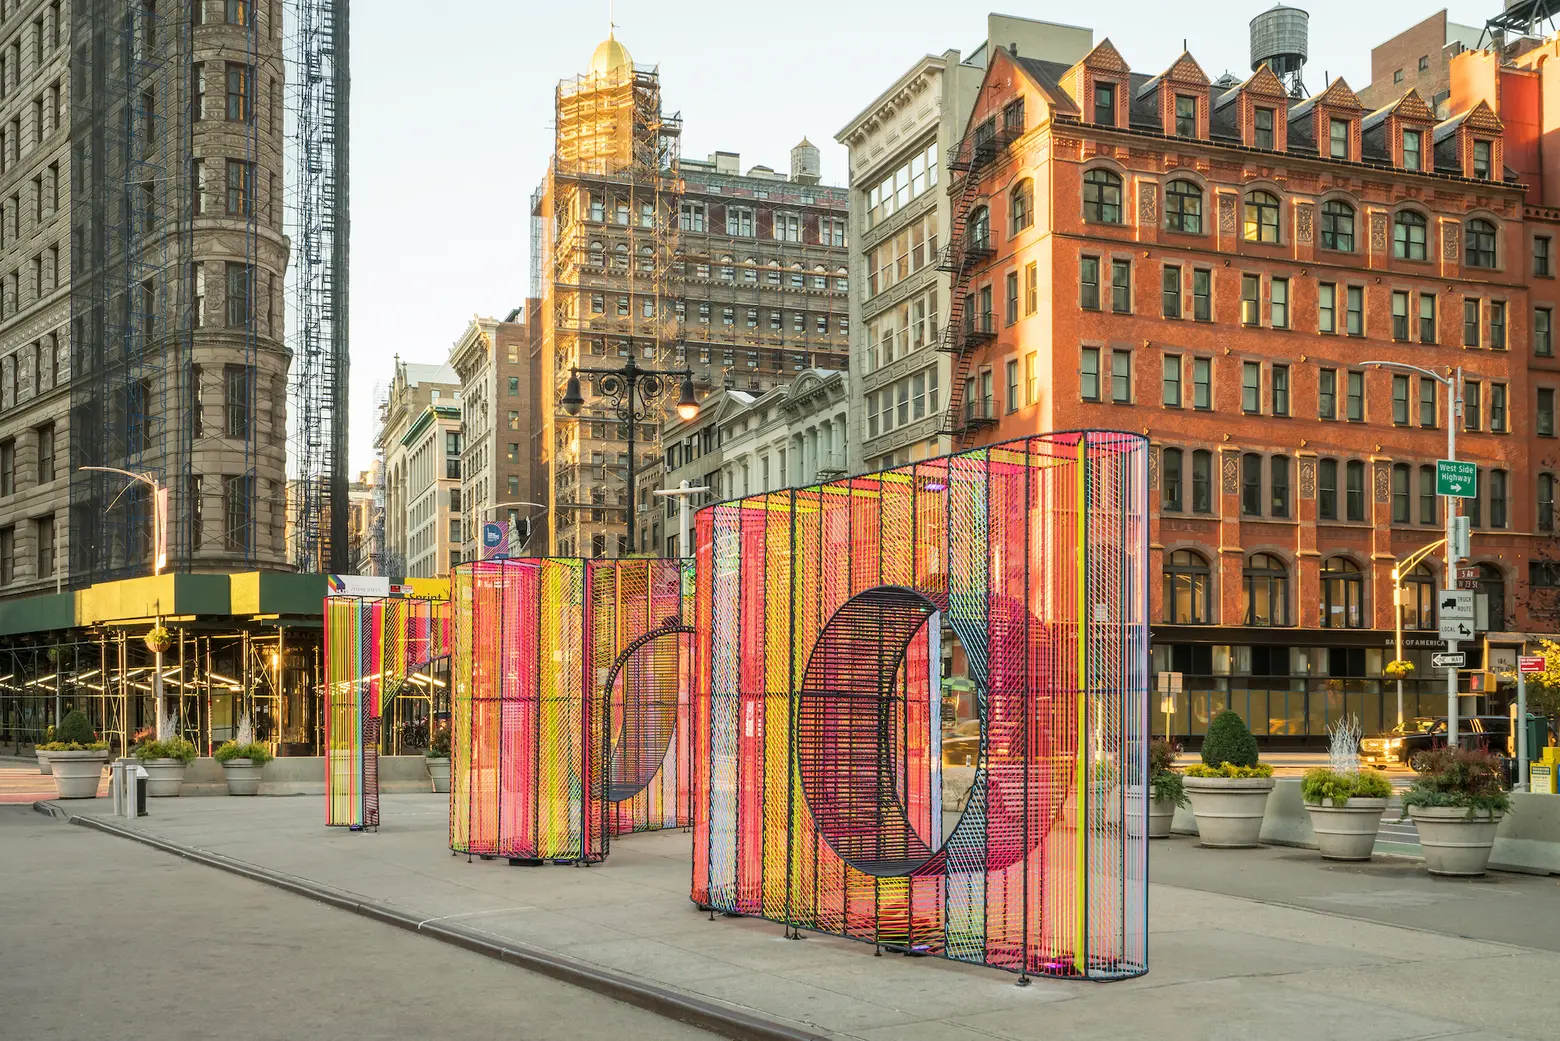 Kaleidoscope-like holiday installation opens in Flatiron plaza | 6sqft